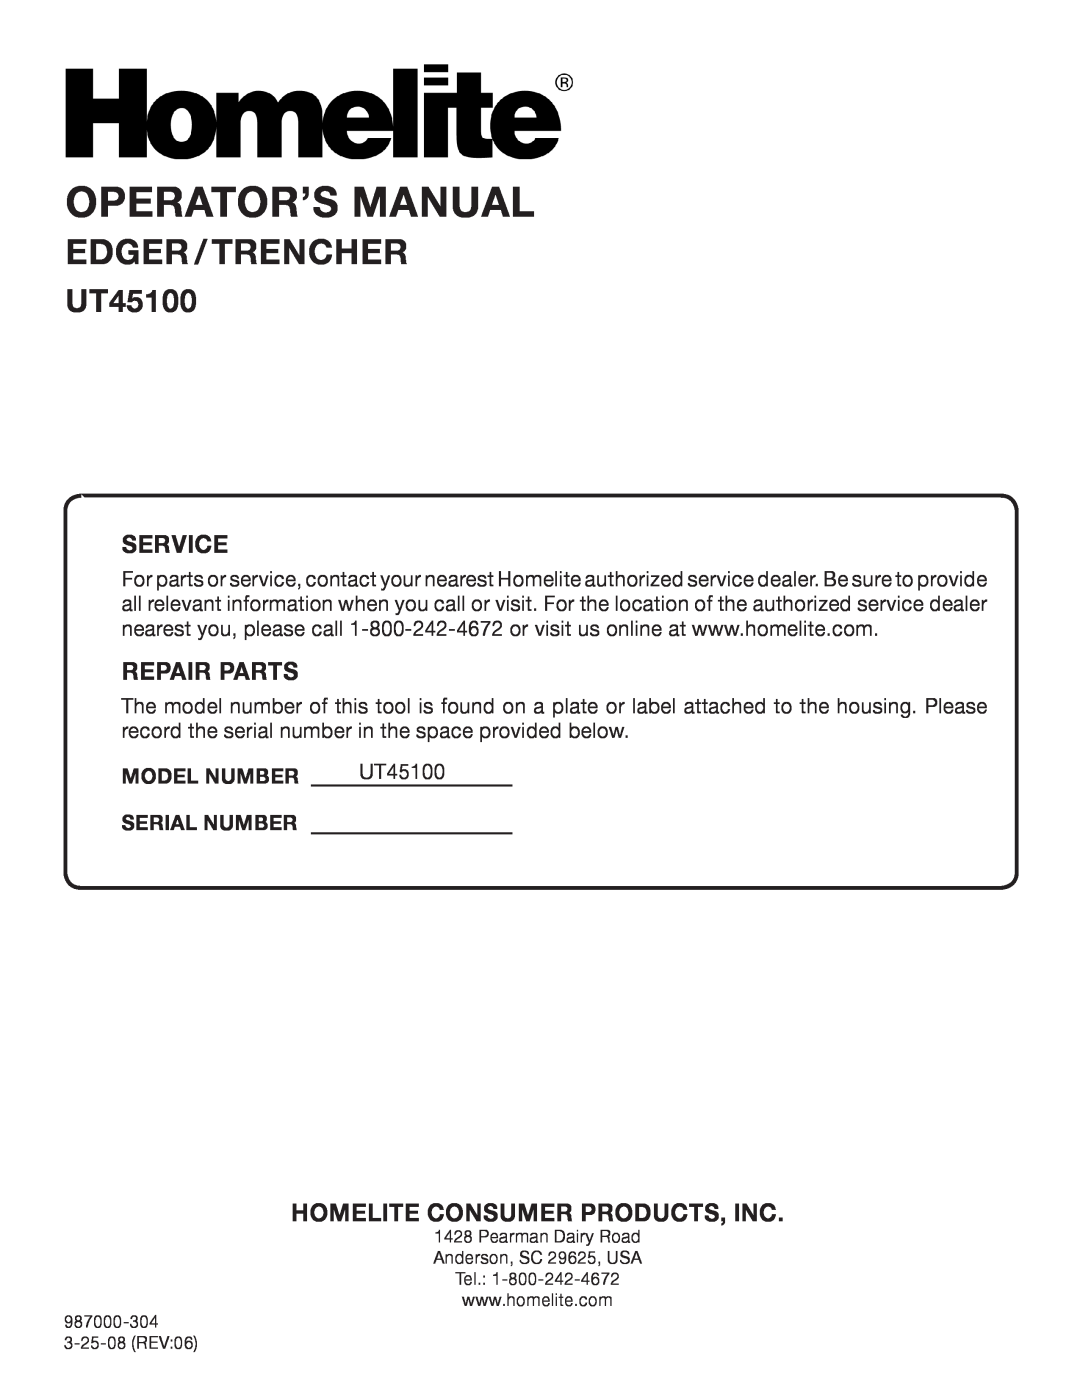 Homelite UT45100 manual Operator’S Manual, EDGER / trencher, Service, Repair Parts, Homelite Consumer Products, Inc 